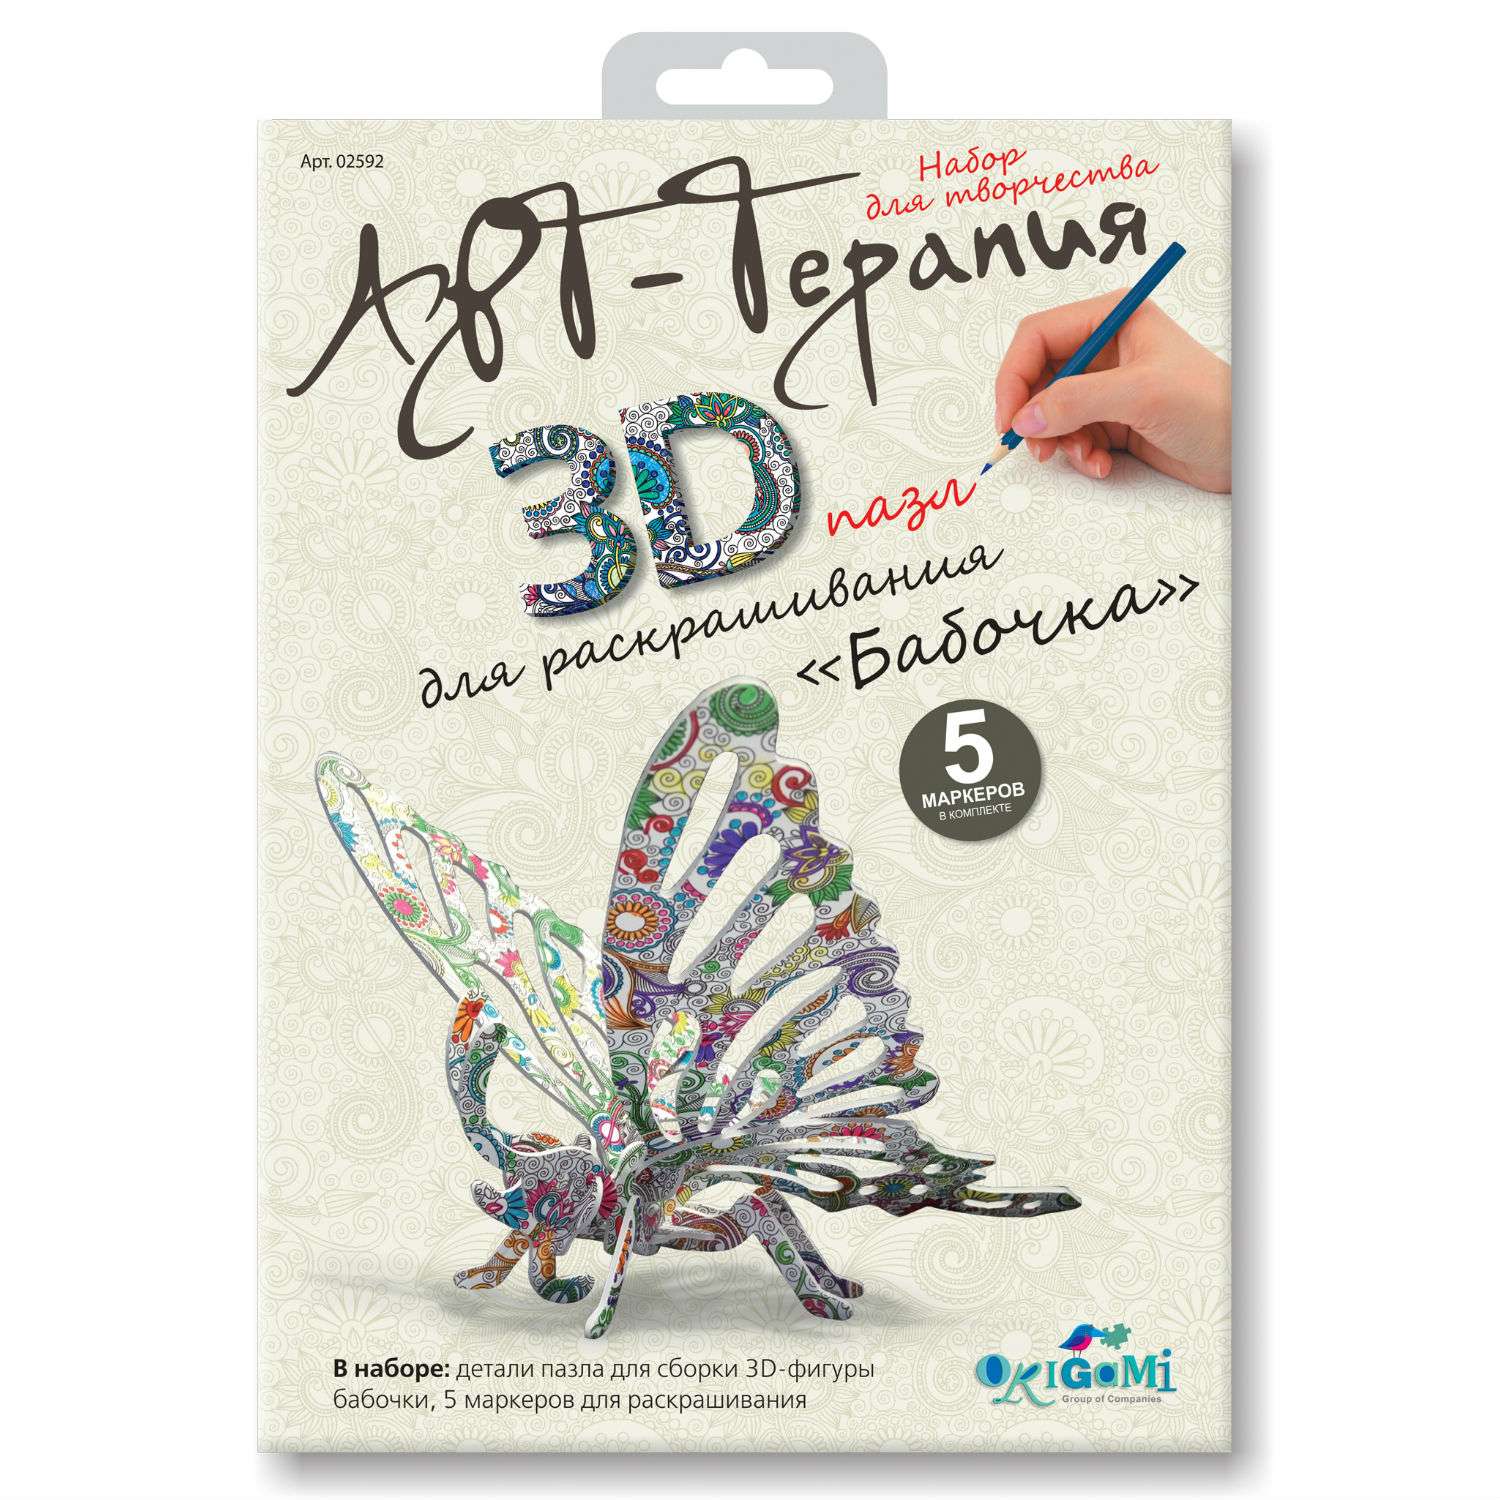 Пазл ORIGAMI 3D Арттерапия Бабочка для раскрашивания - фото 1